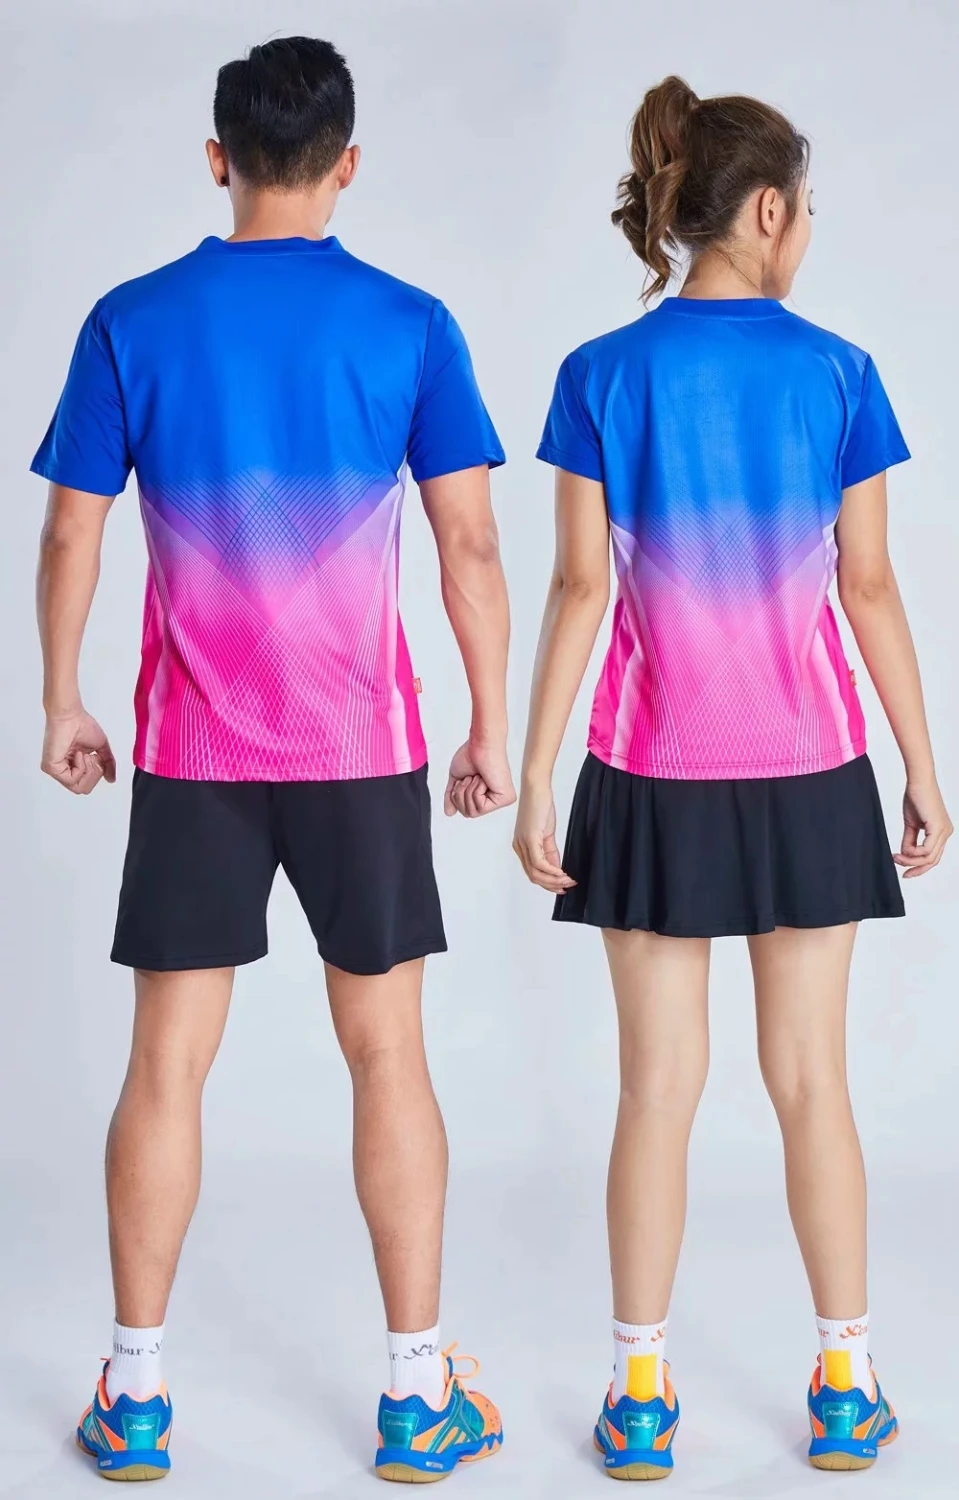 Contrast Badminton T-Shirt Sets Quick Dry Sweat Absorption Breathable Table Tennis Sports Suits For Men& Women L802SHC